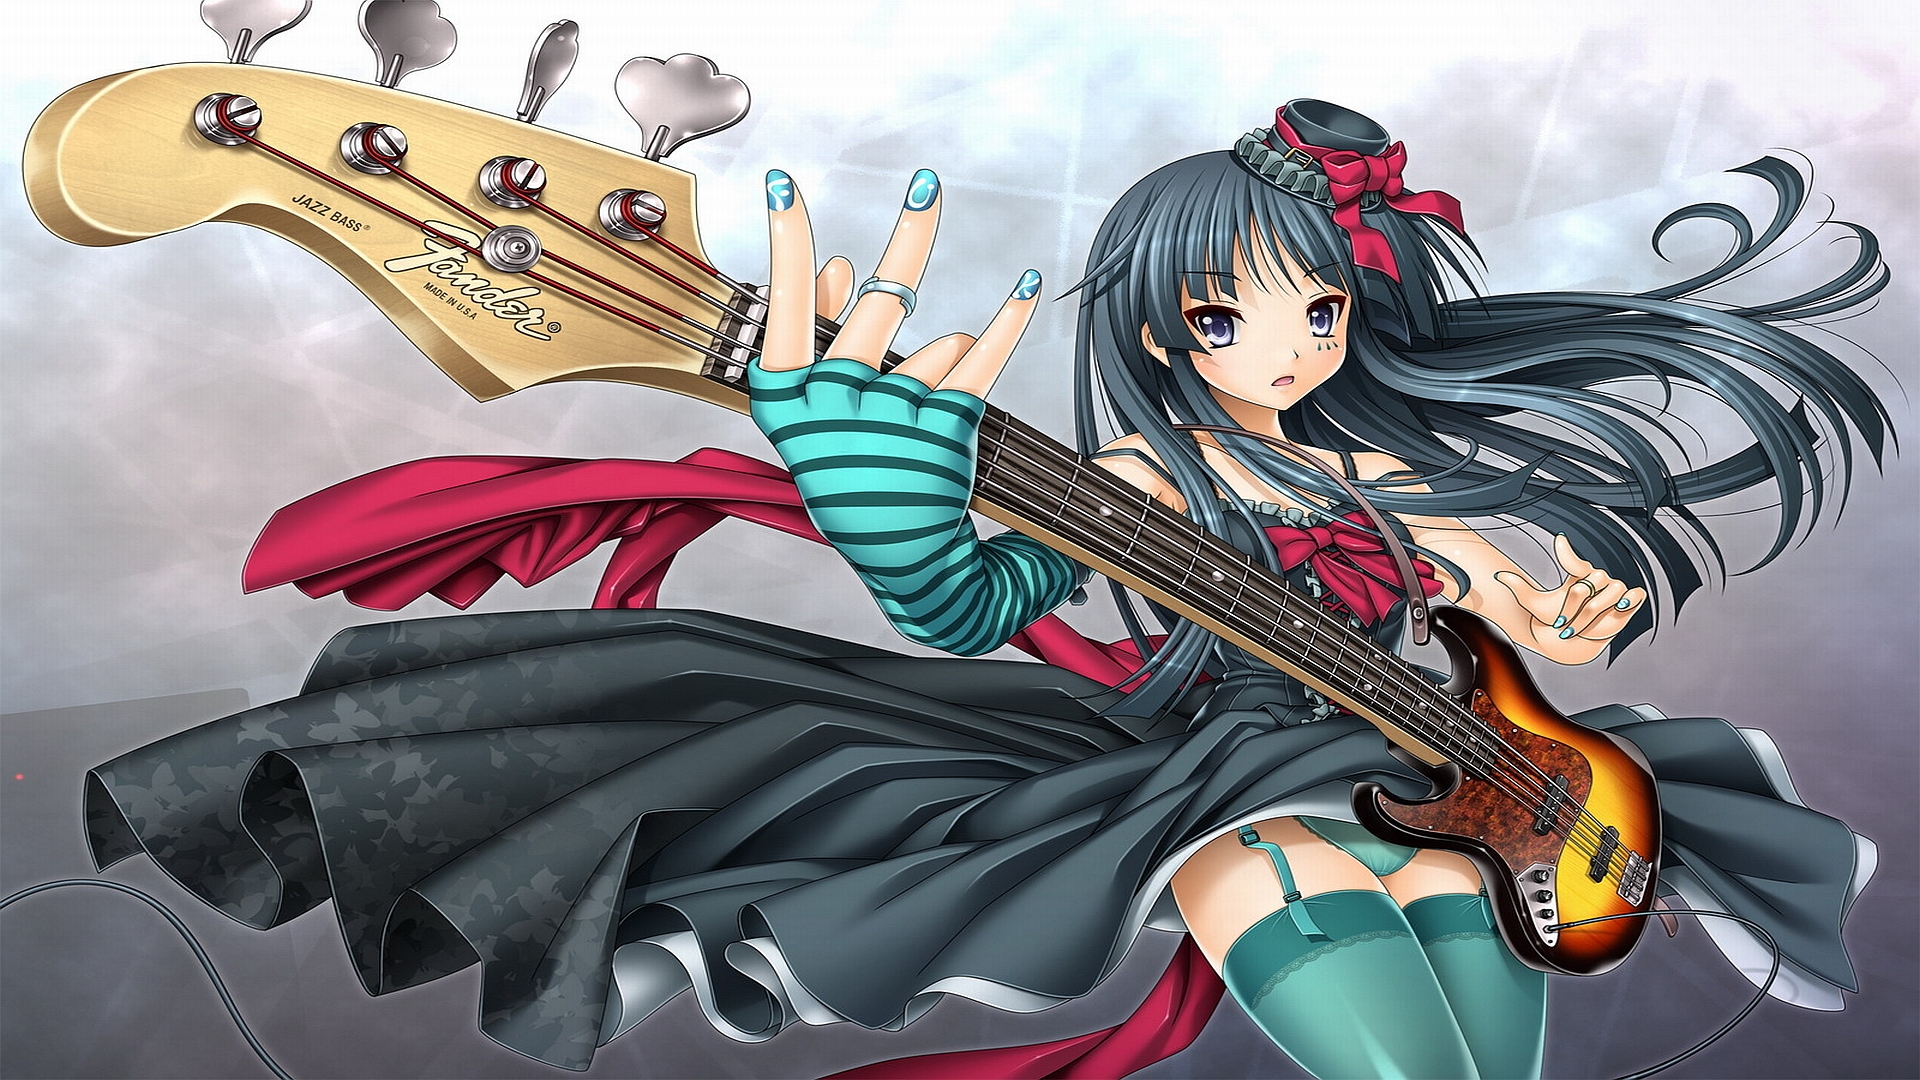 K-ON! character Mio Akiyama playing guitar against a vibrant background